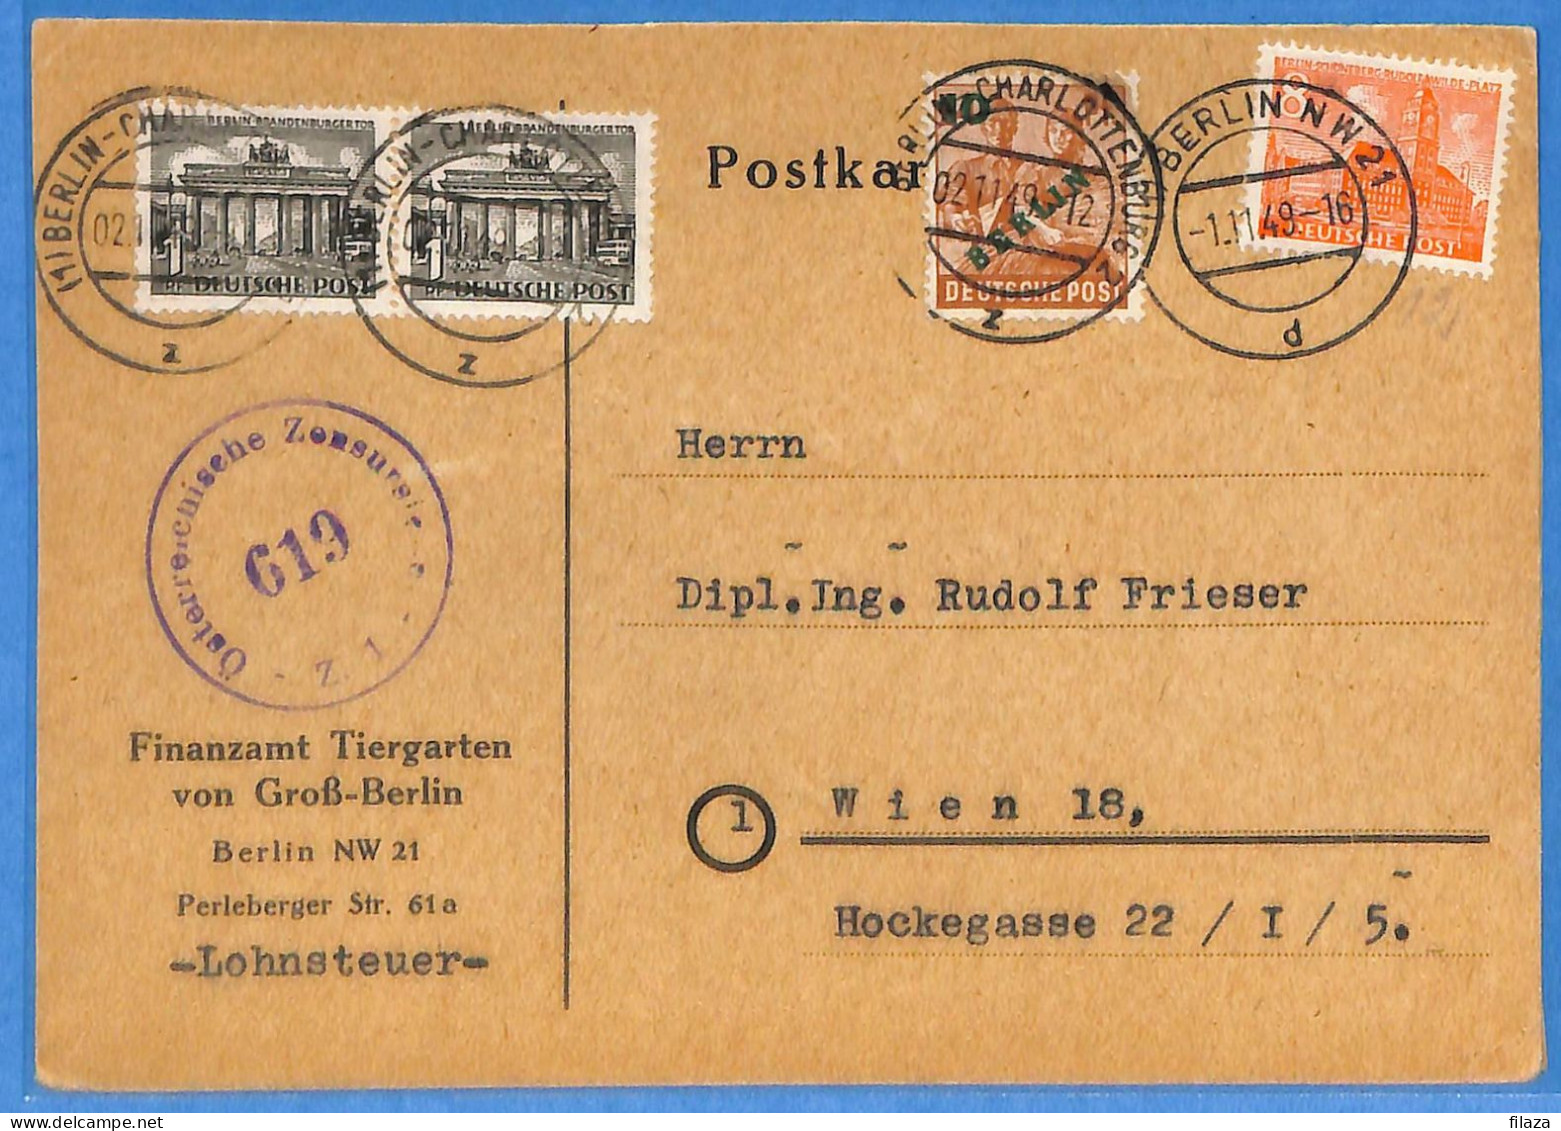 Berlin West 1949 - Carte Postale De Berlin - G33035 - Briefe U. Dokumente